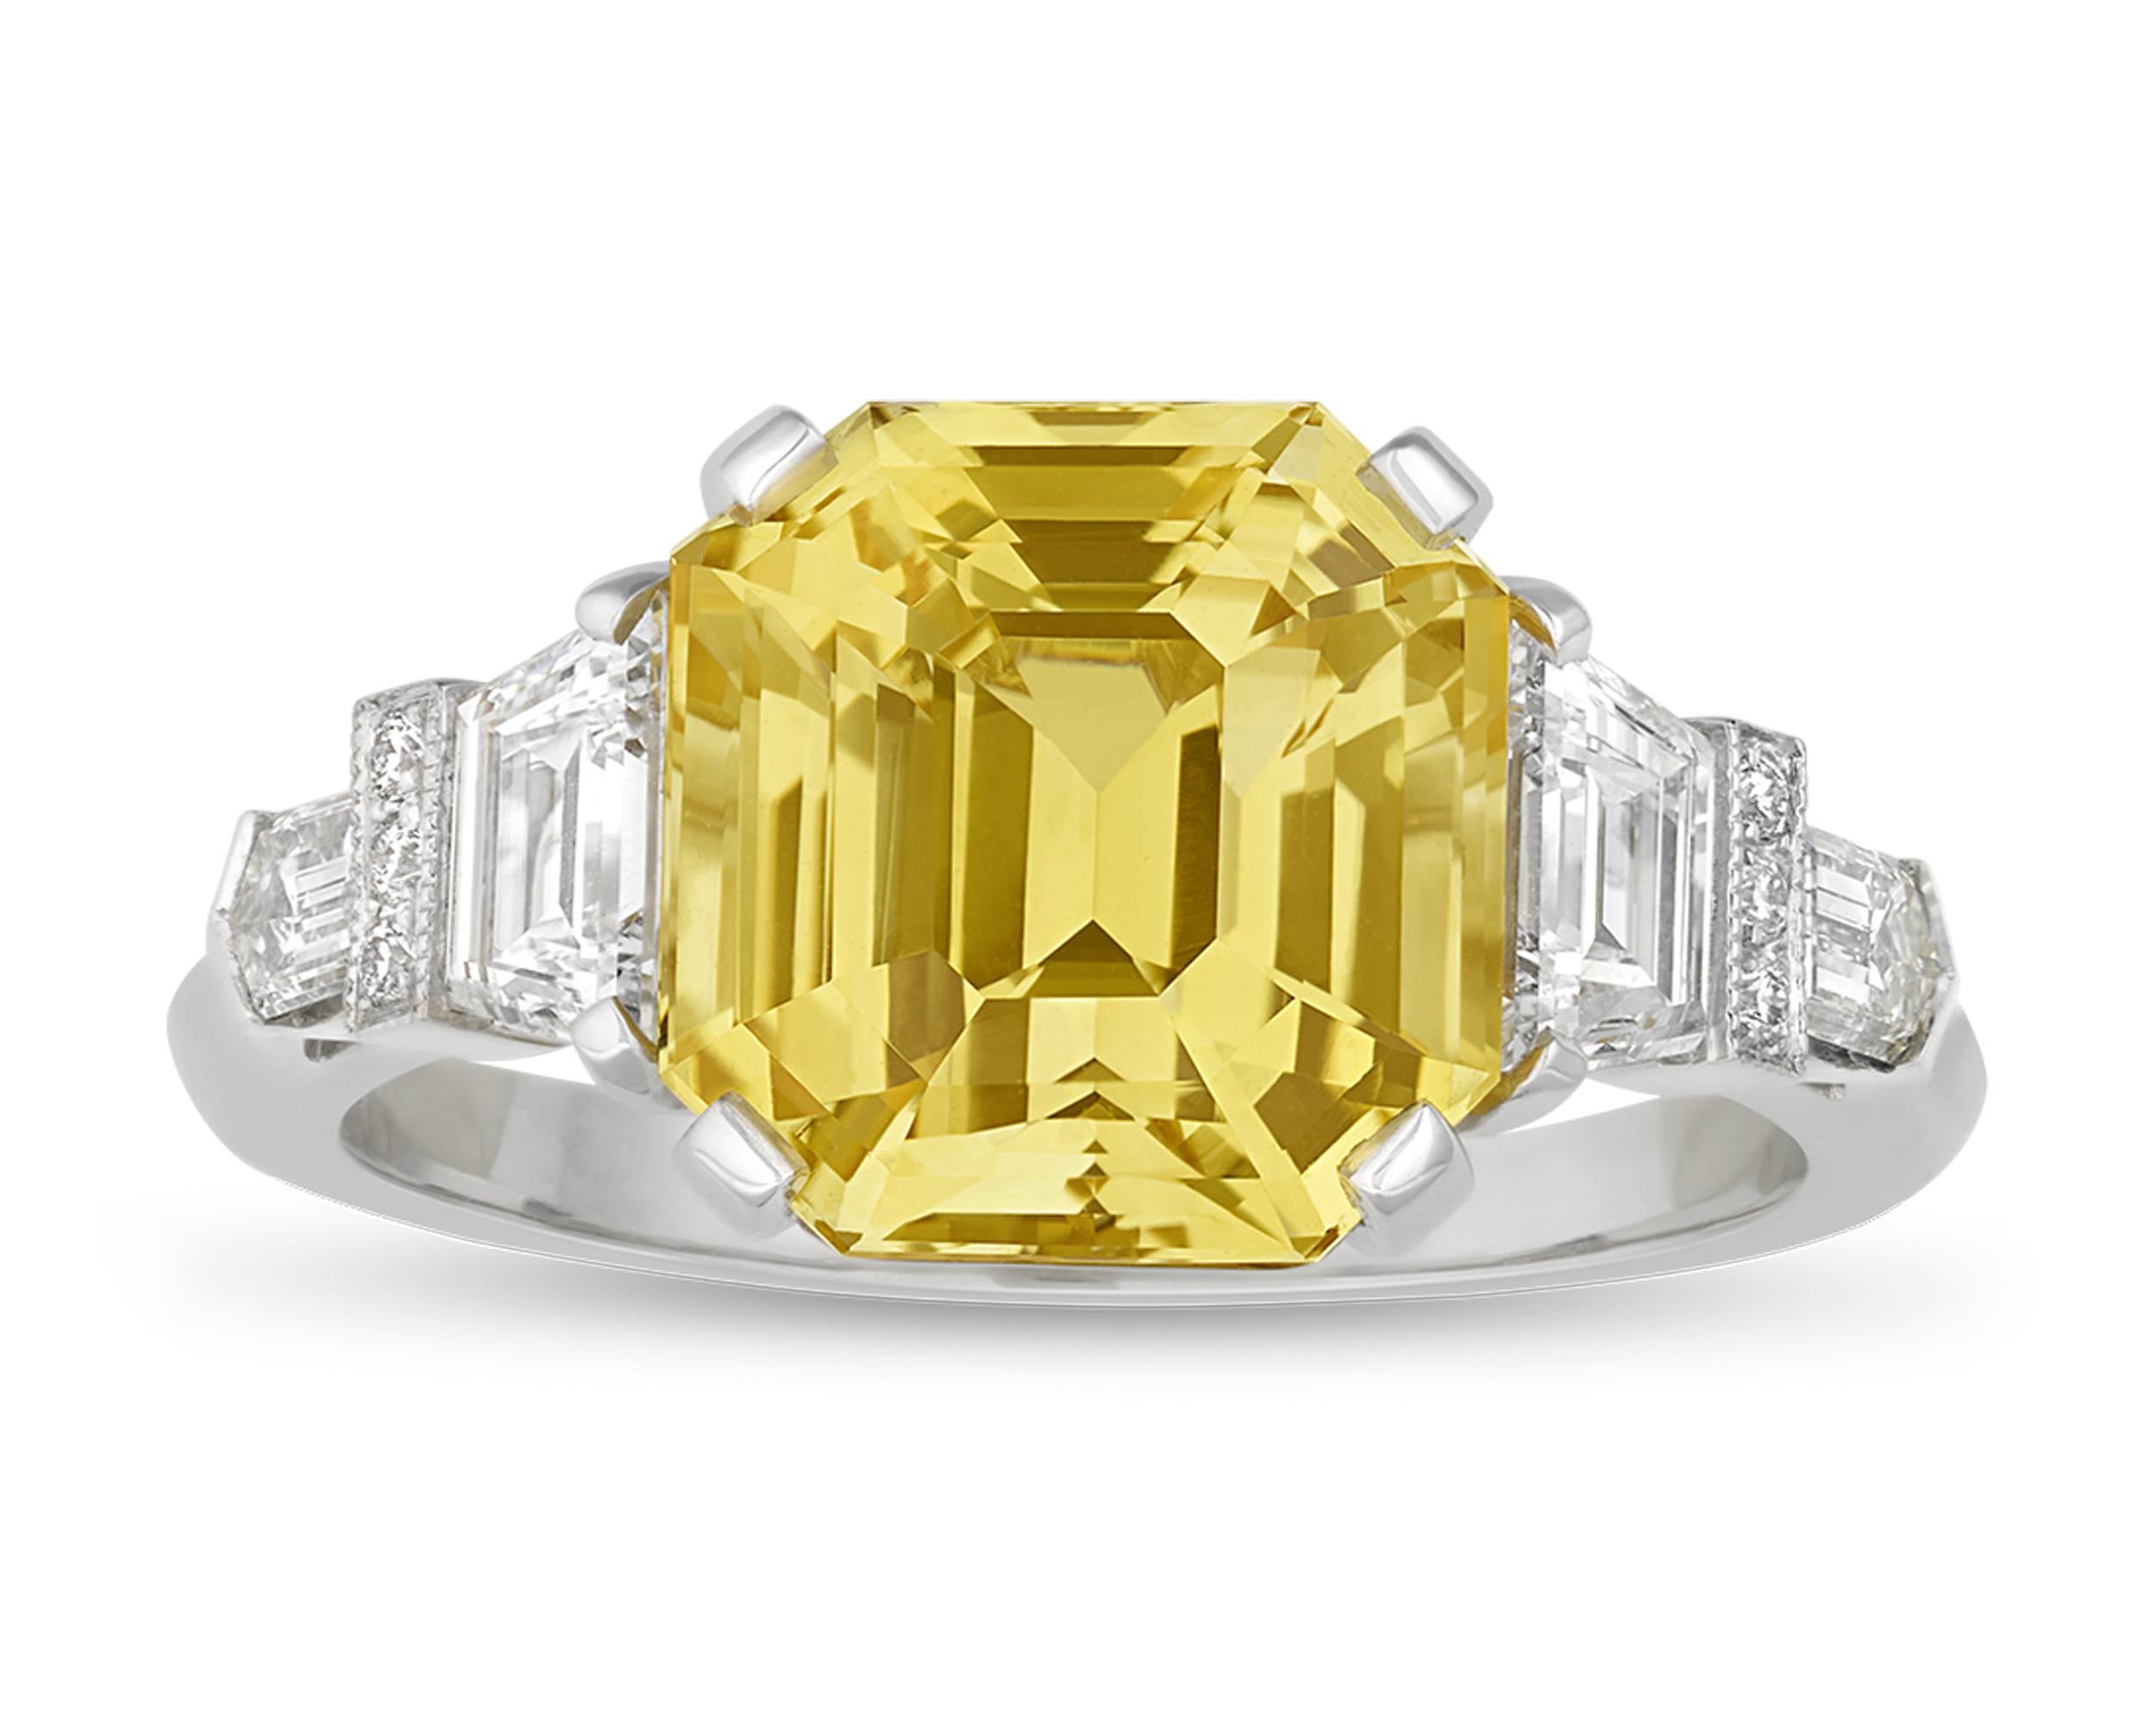 Octagon Cut Yellow Ceylon Sapphire Ring by Raymond Yard, 5.10 Carats